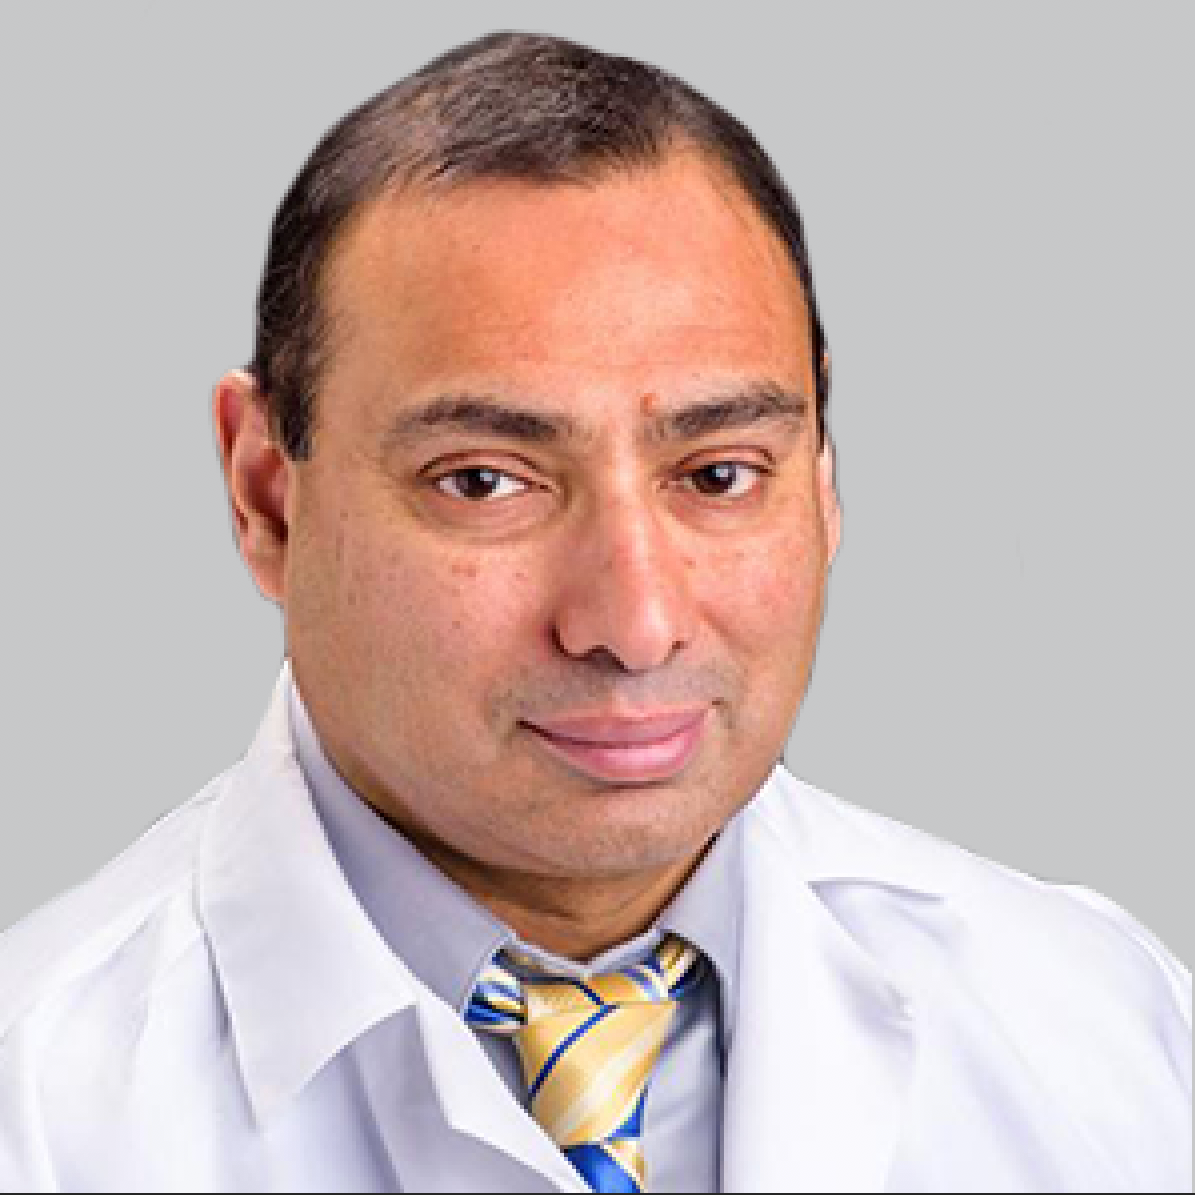 Adnan I. Qureshi, MD, professor of clinical neurology, University of Missouri Health Care